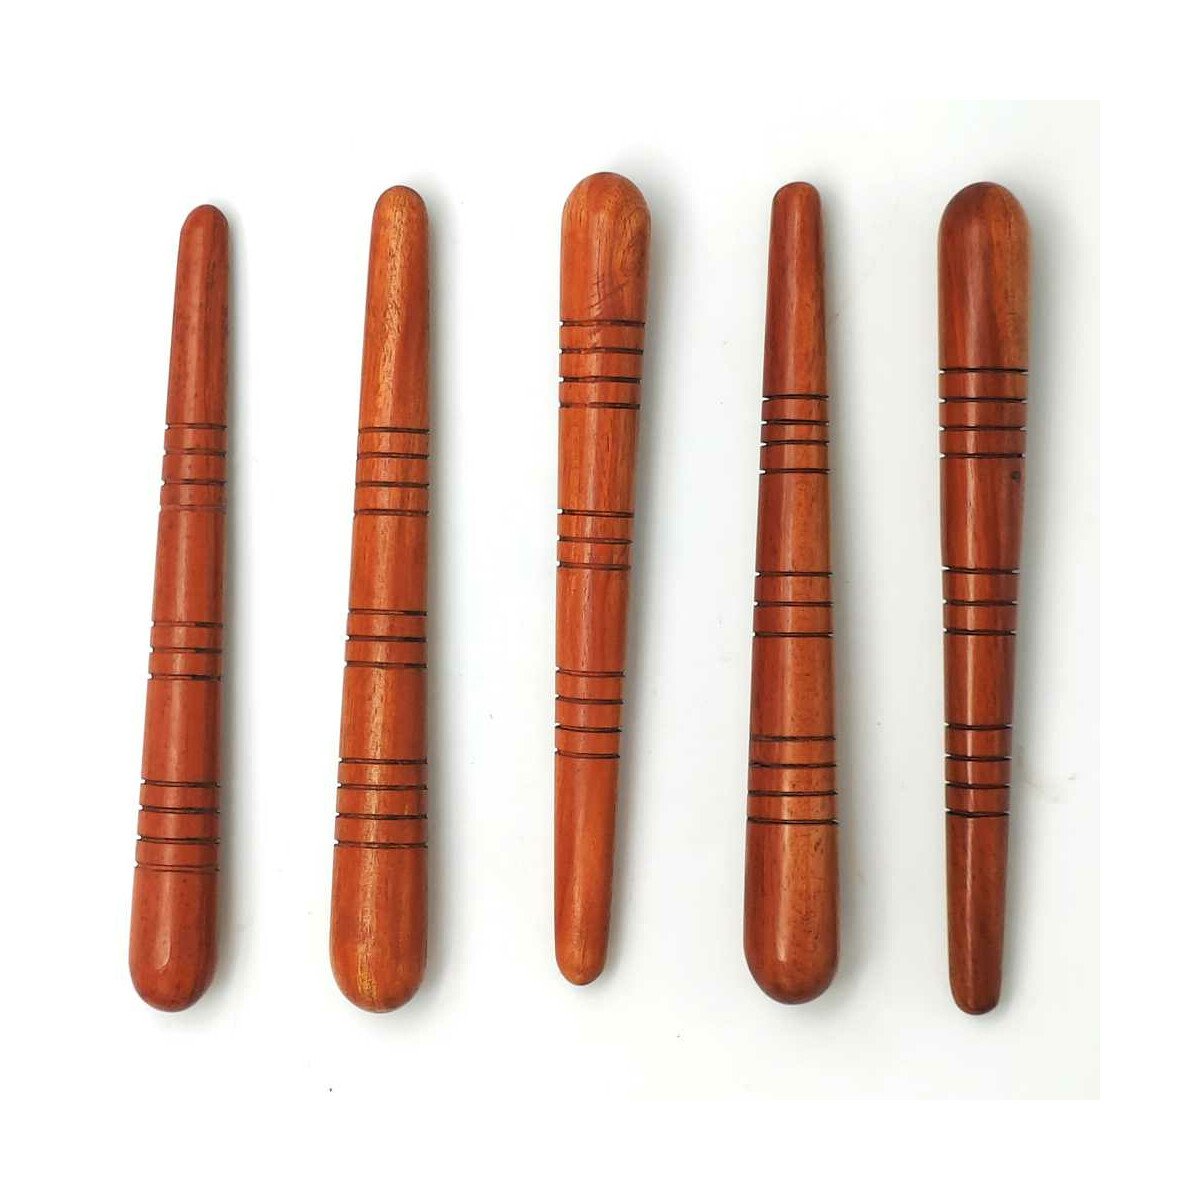 5 uds. Varilla de madera para masaje